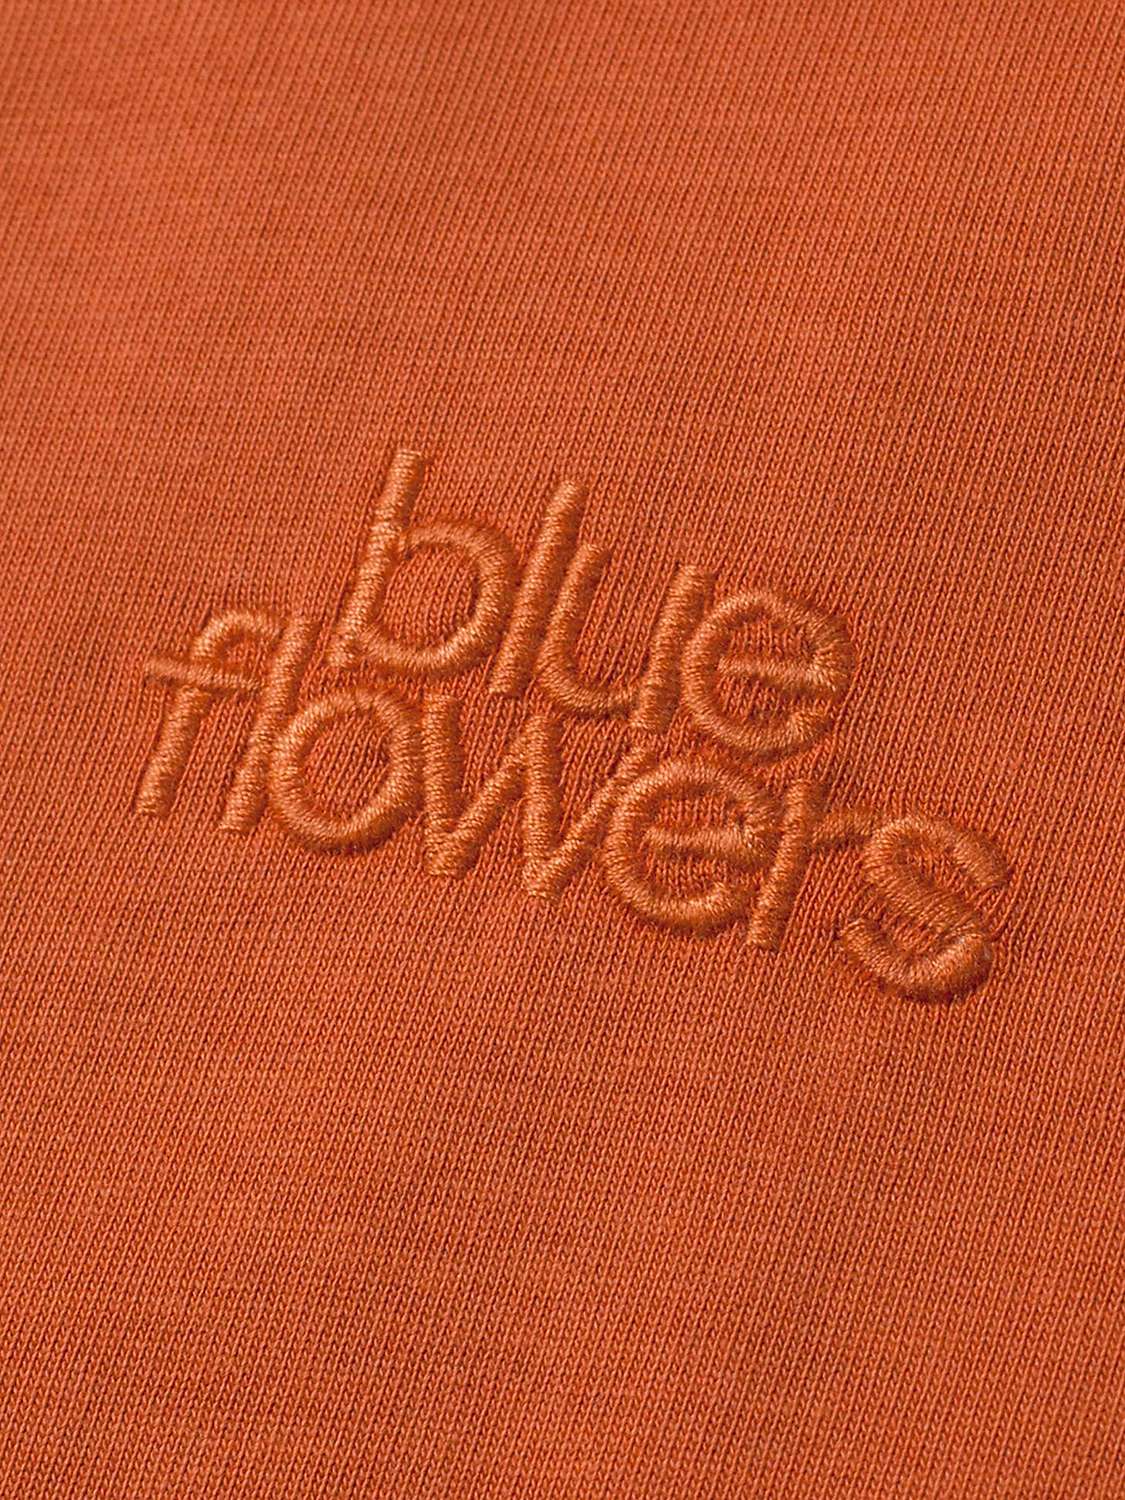 Buy Blue Flowers Rumble T-Shirt, Dark Orange Online at johnlewis.com